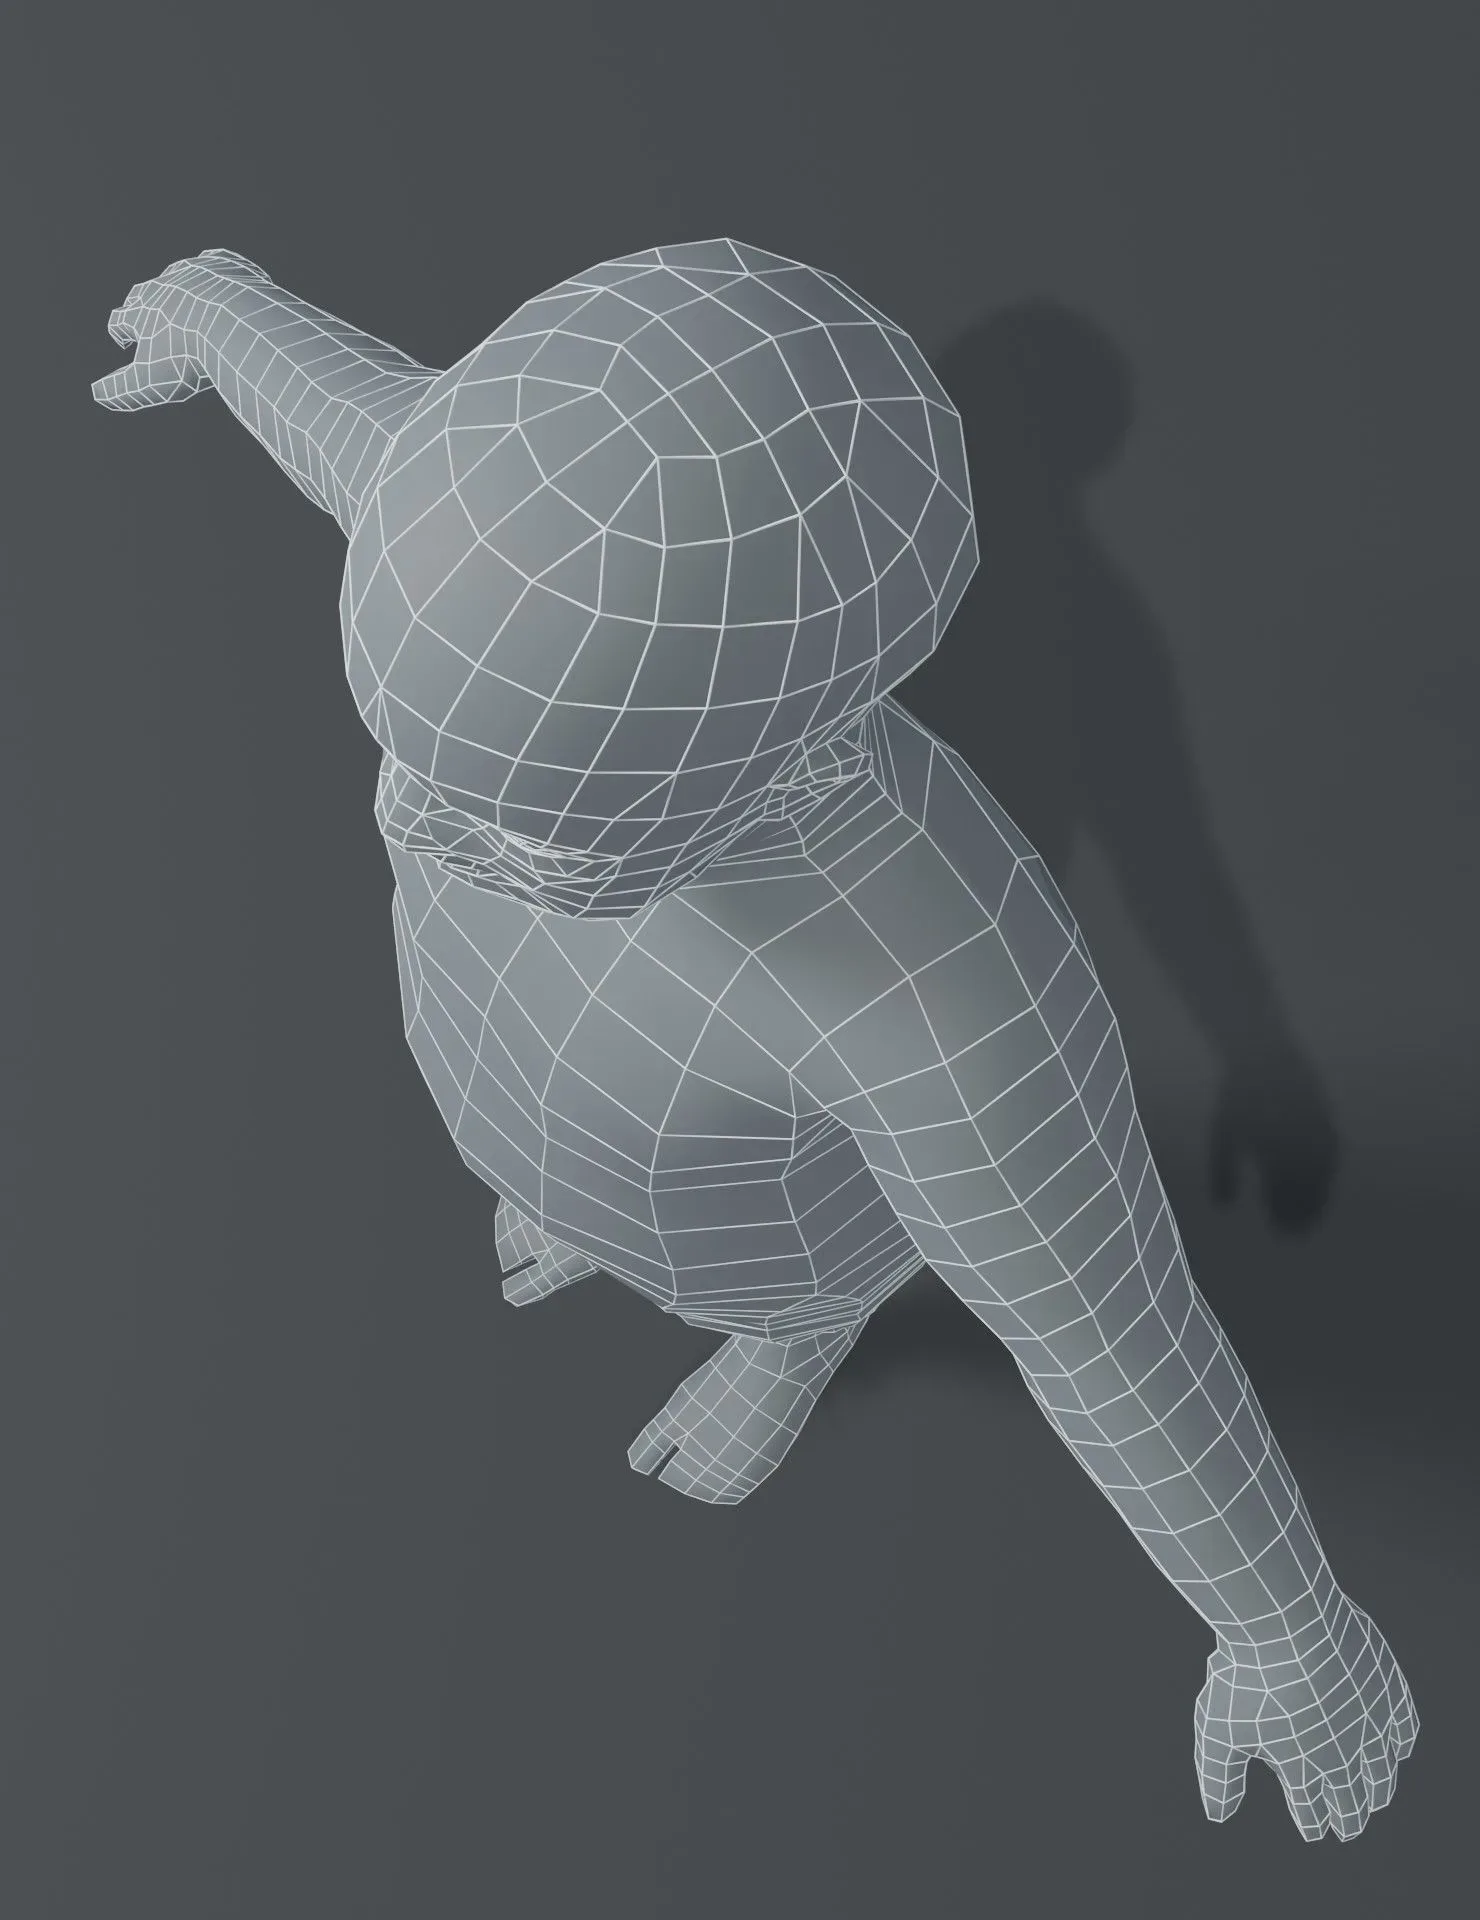 Fat Boy Kid Child Body Base Mesh 3D Model